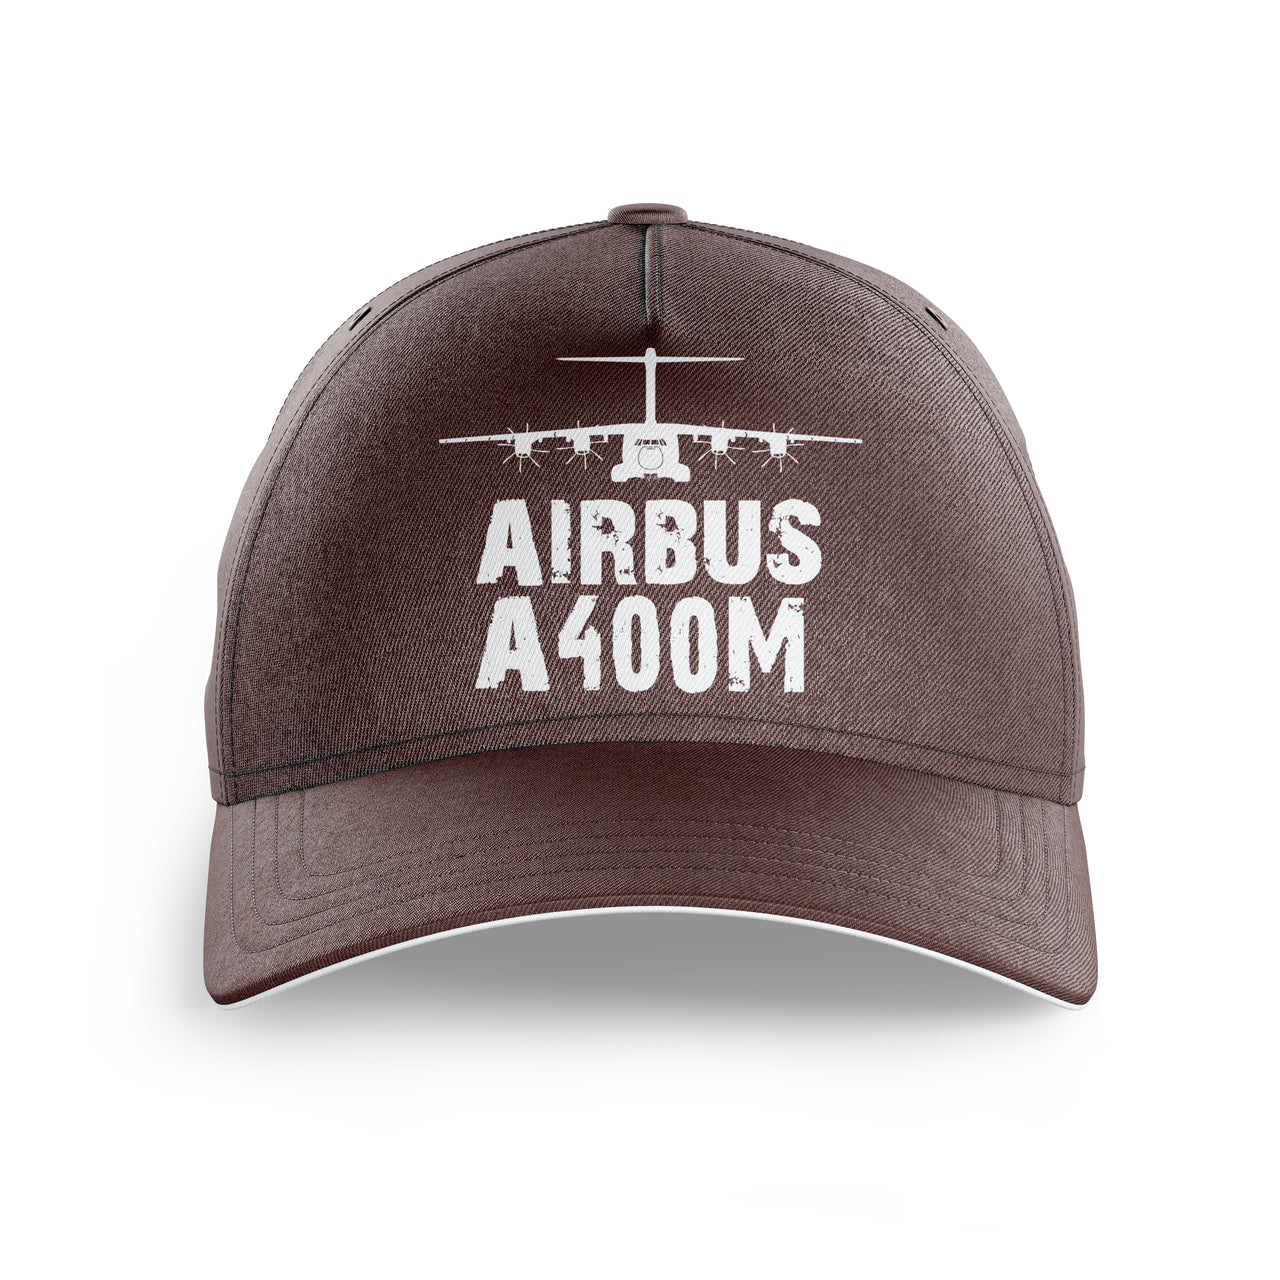 Airbus A400M & Plane Printed Hats